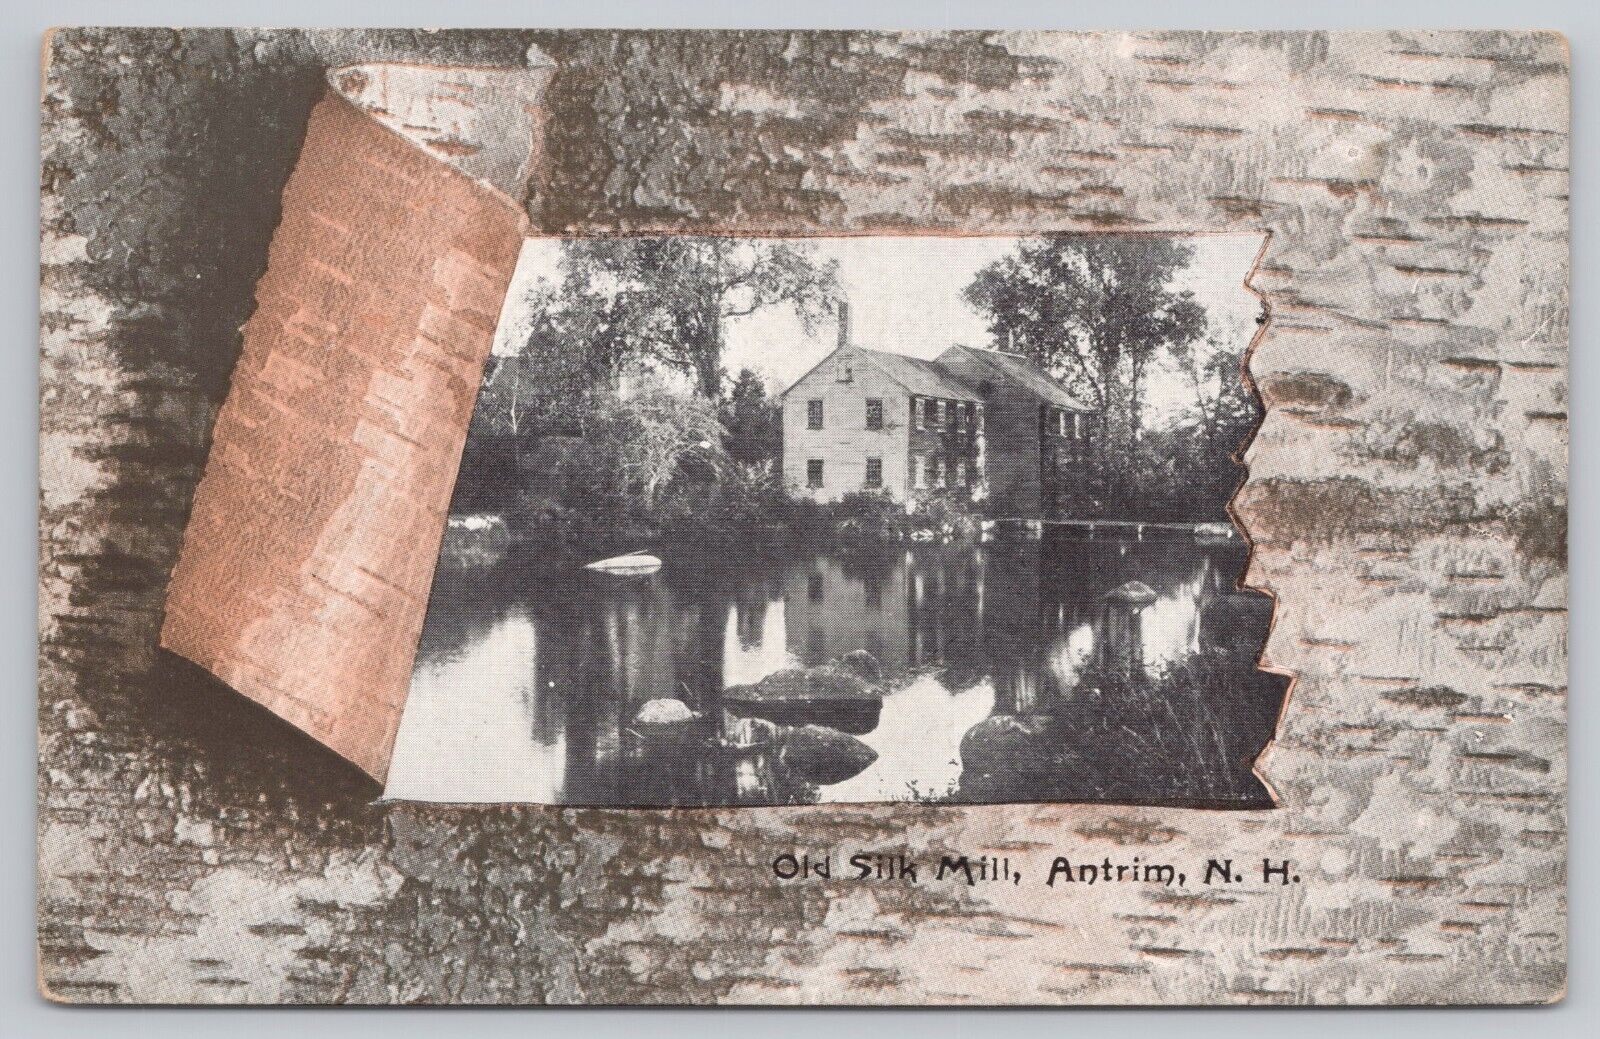 Antrim New Hampshire, Old Silk Mill, Faux Wood Border, Vintage Postcard